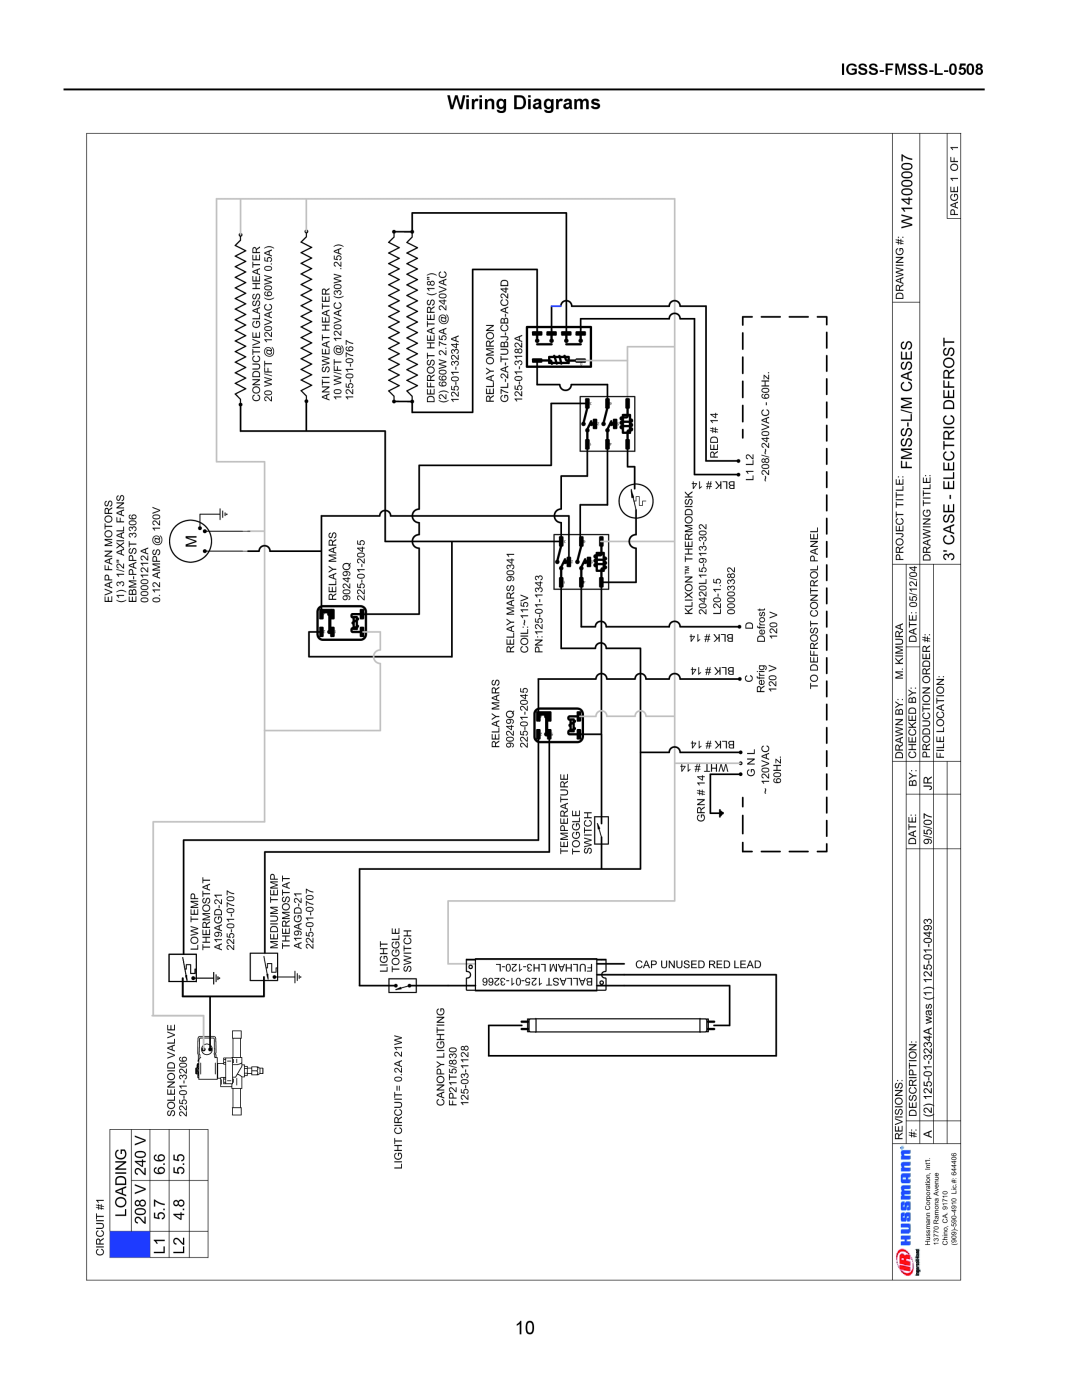 hussman operation manual Wiring Diagrams, LOADING 208 V 240 L1 5.7 L2, Case - Electric Defrost, IGSS-FMSS-L-0508 